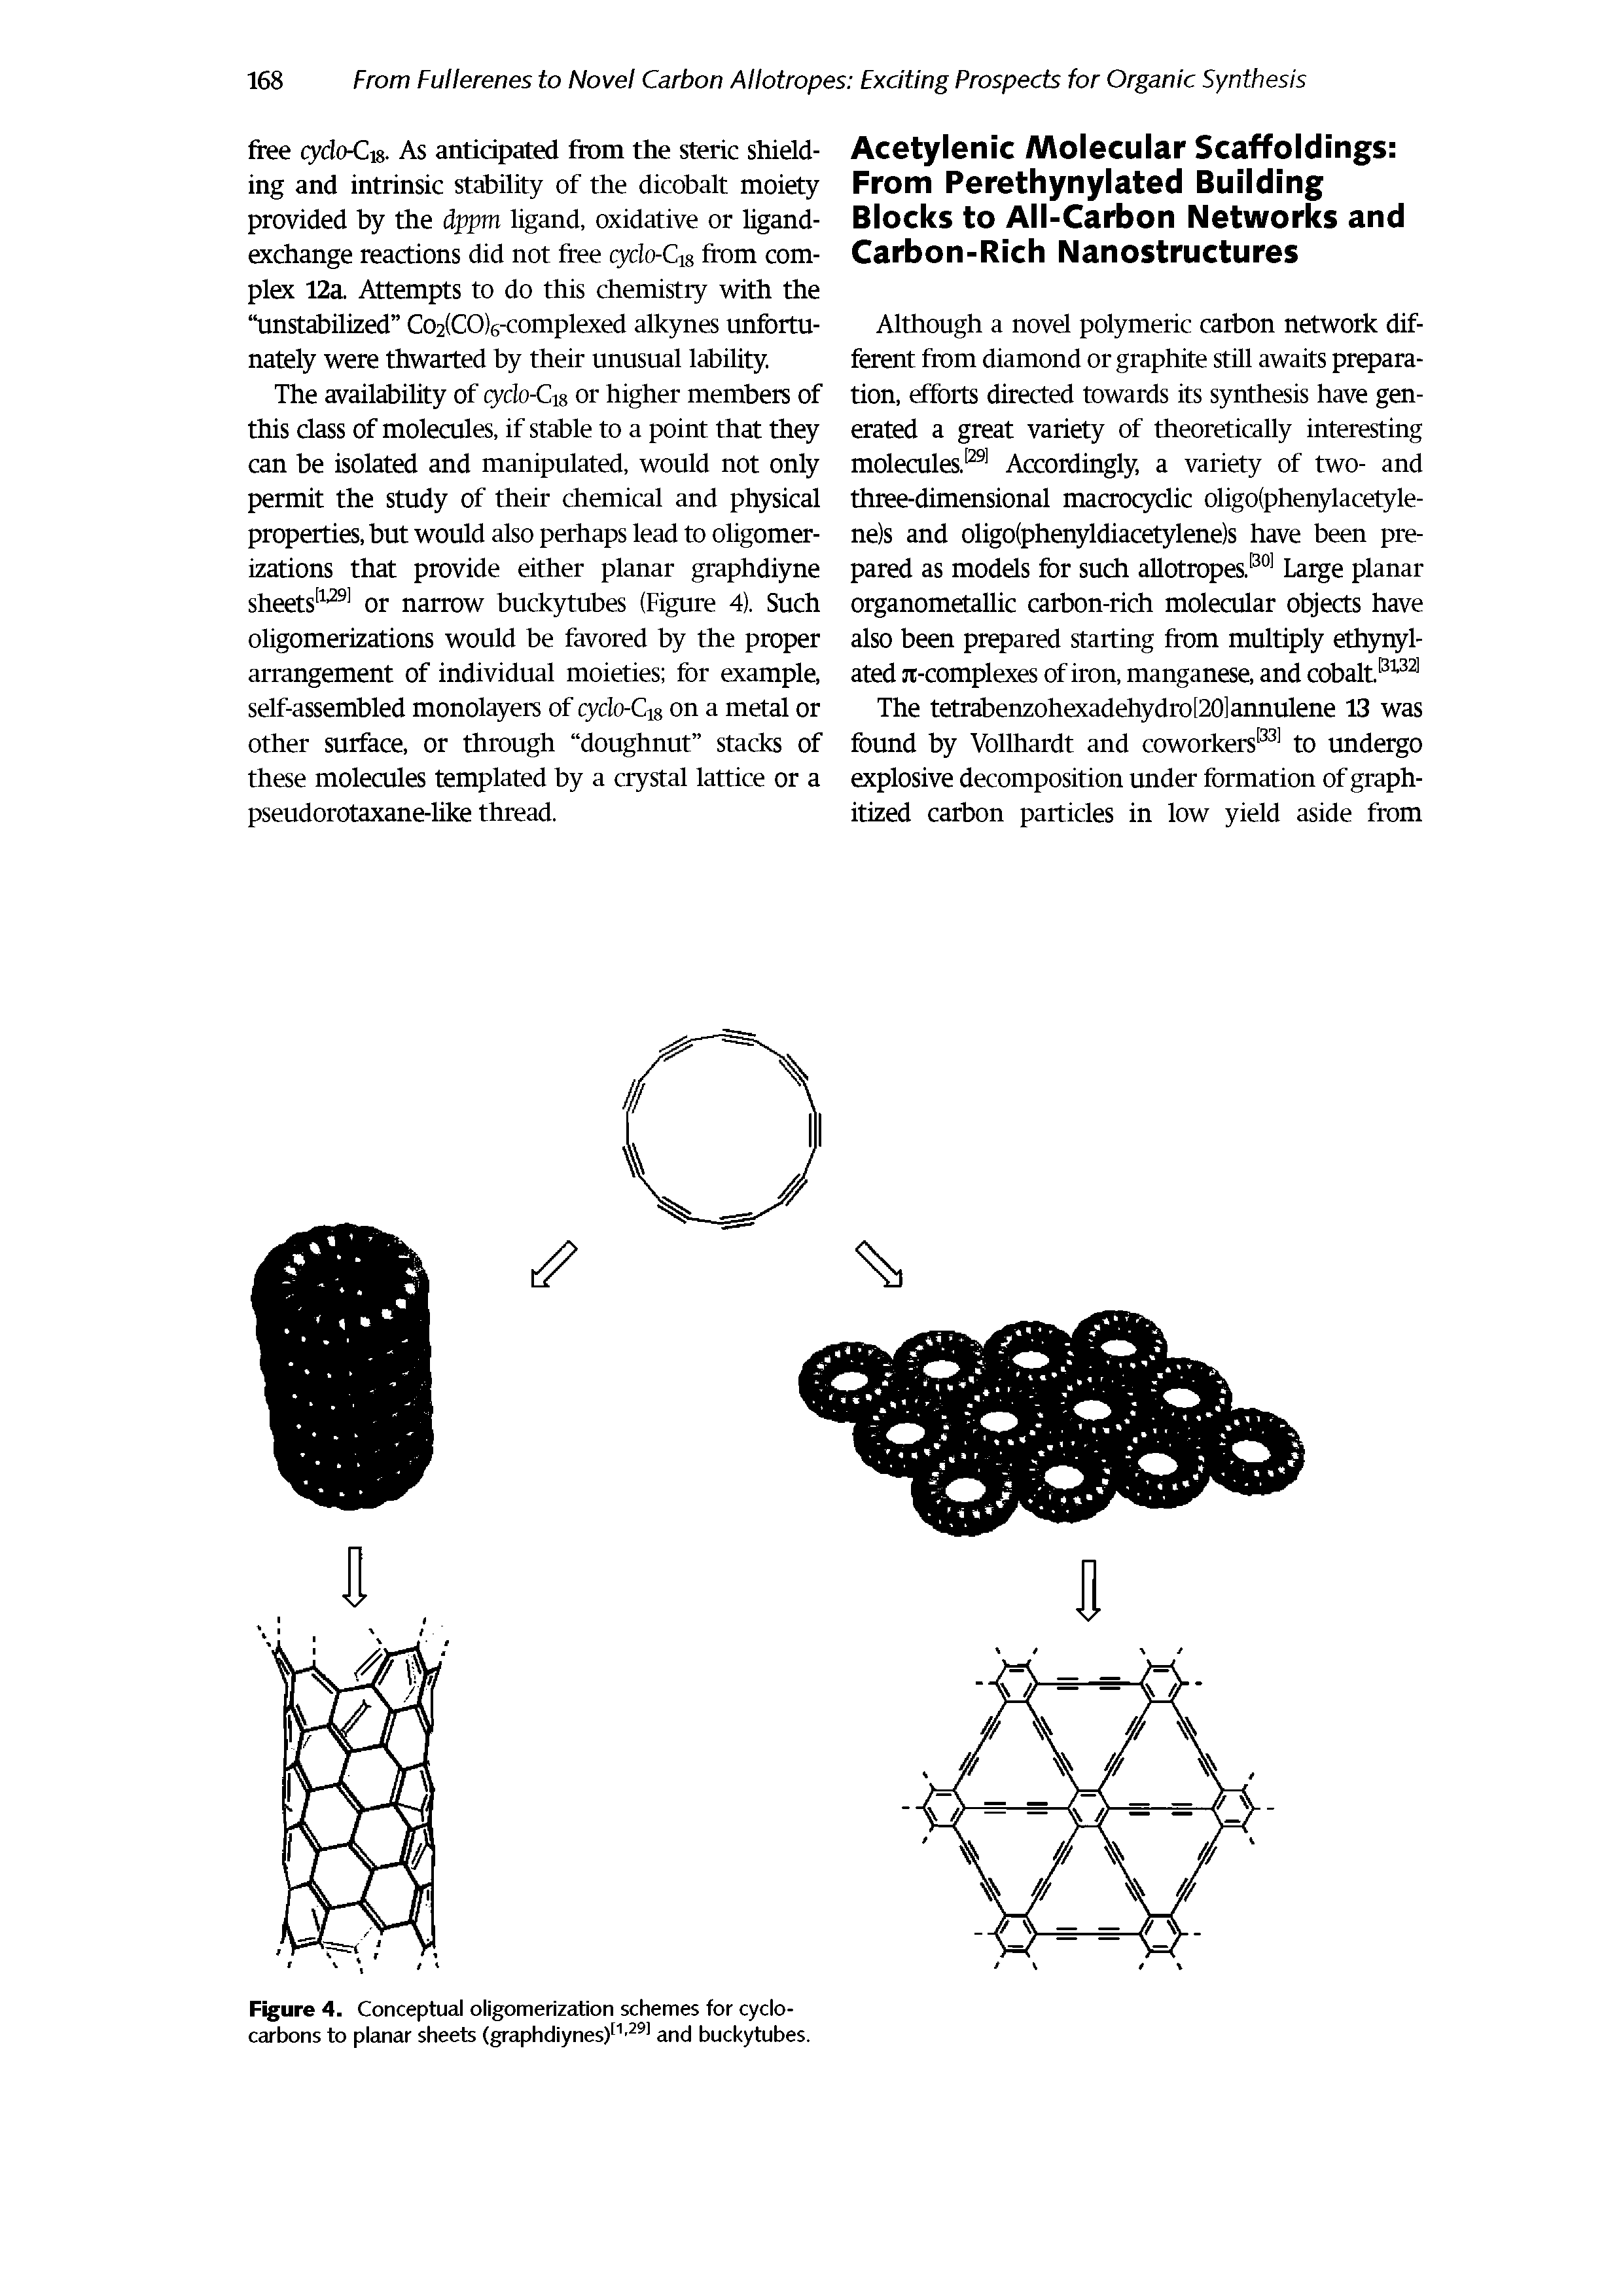 Figure 4. Conceptual oligomerization schemes for cyclocarbons to planar sheets (graphdiynes)11 291 and buckytubes.